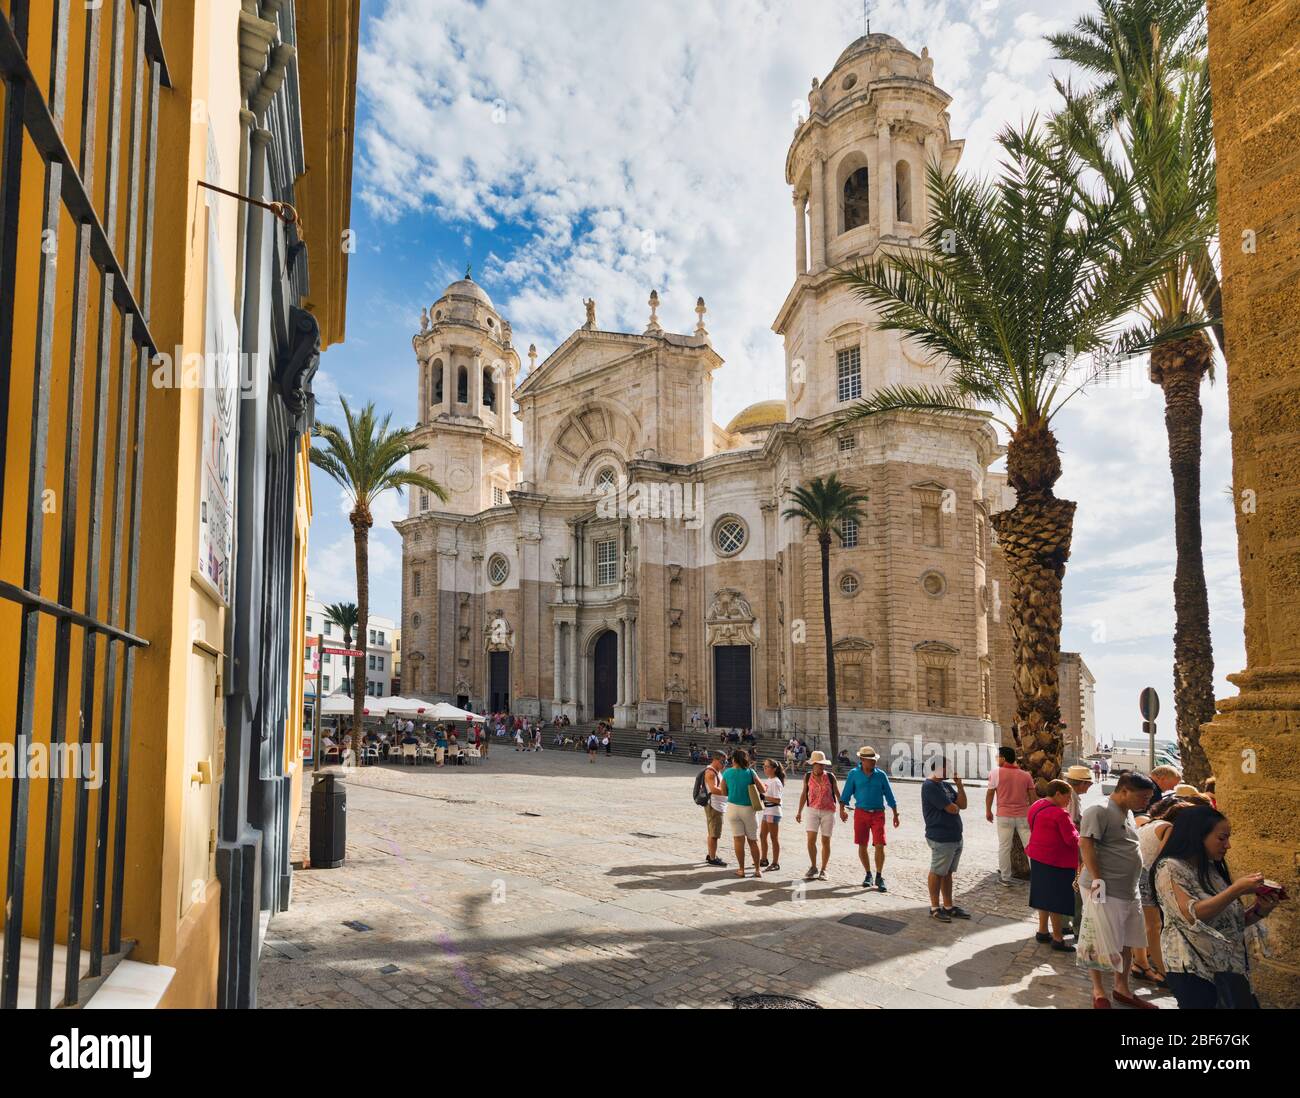 Die Kathedrale auf der Plaza de la Catedral, oder der Kathedralenplatz, Cadiz, Provinz Cadiz, Costa de la Luz, Andalusien, Spanien. Der offizielle Name der cathed Stockfoto